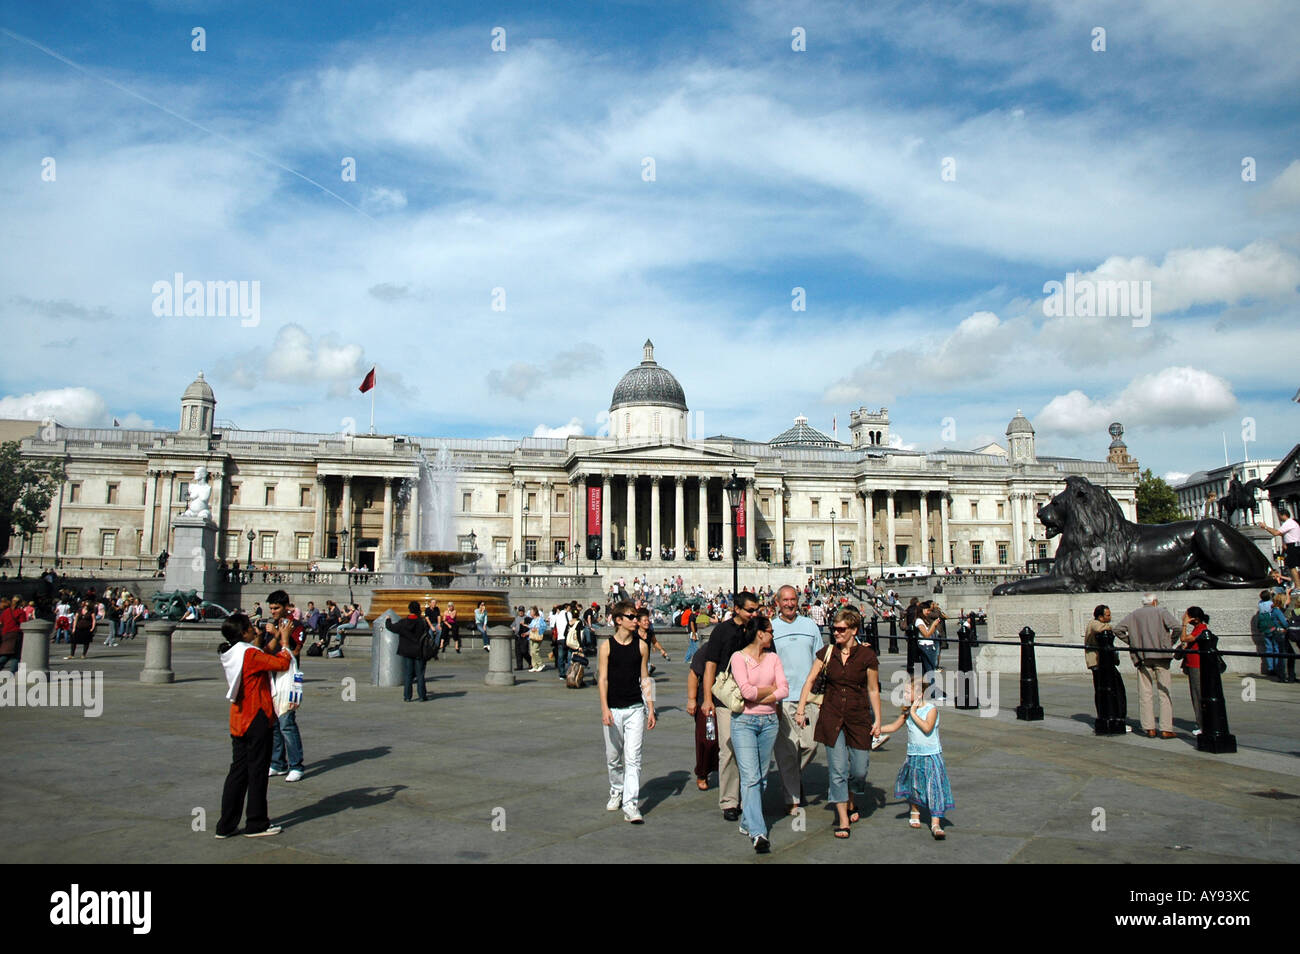 National Gallery at Trafalgar Square in London Stock Photo